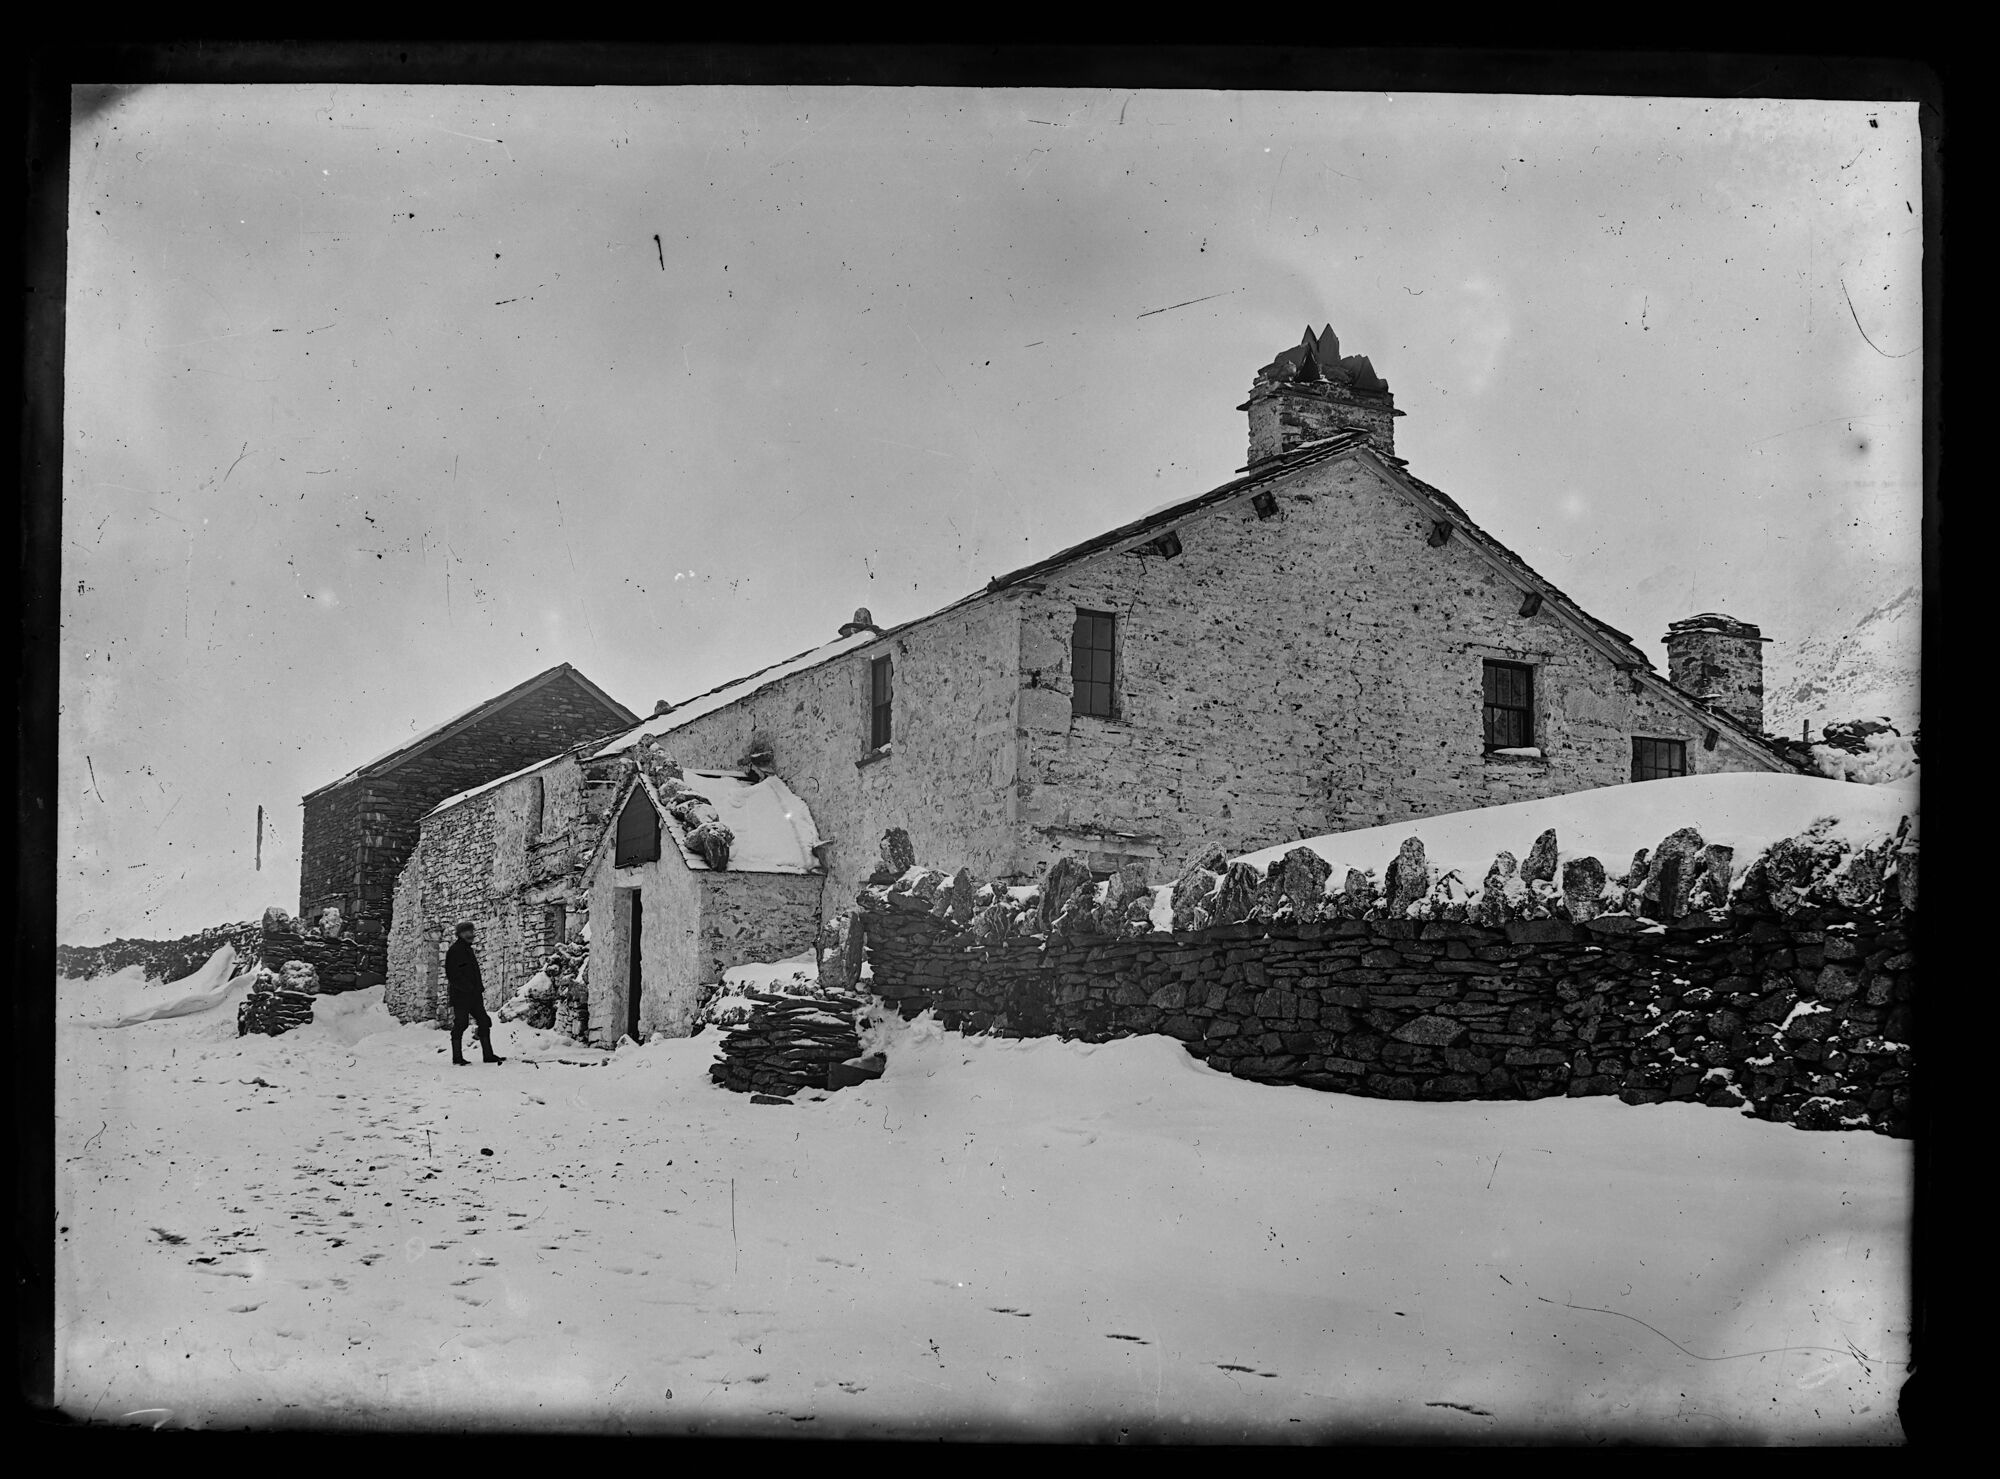 Kirkstone Pass Inn in Winter